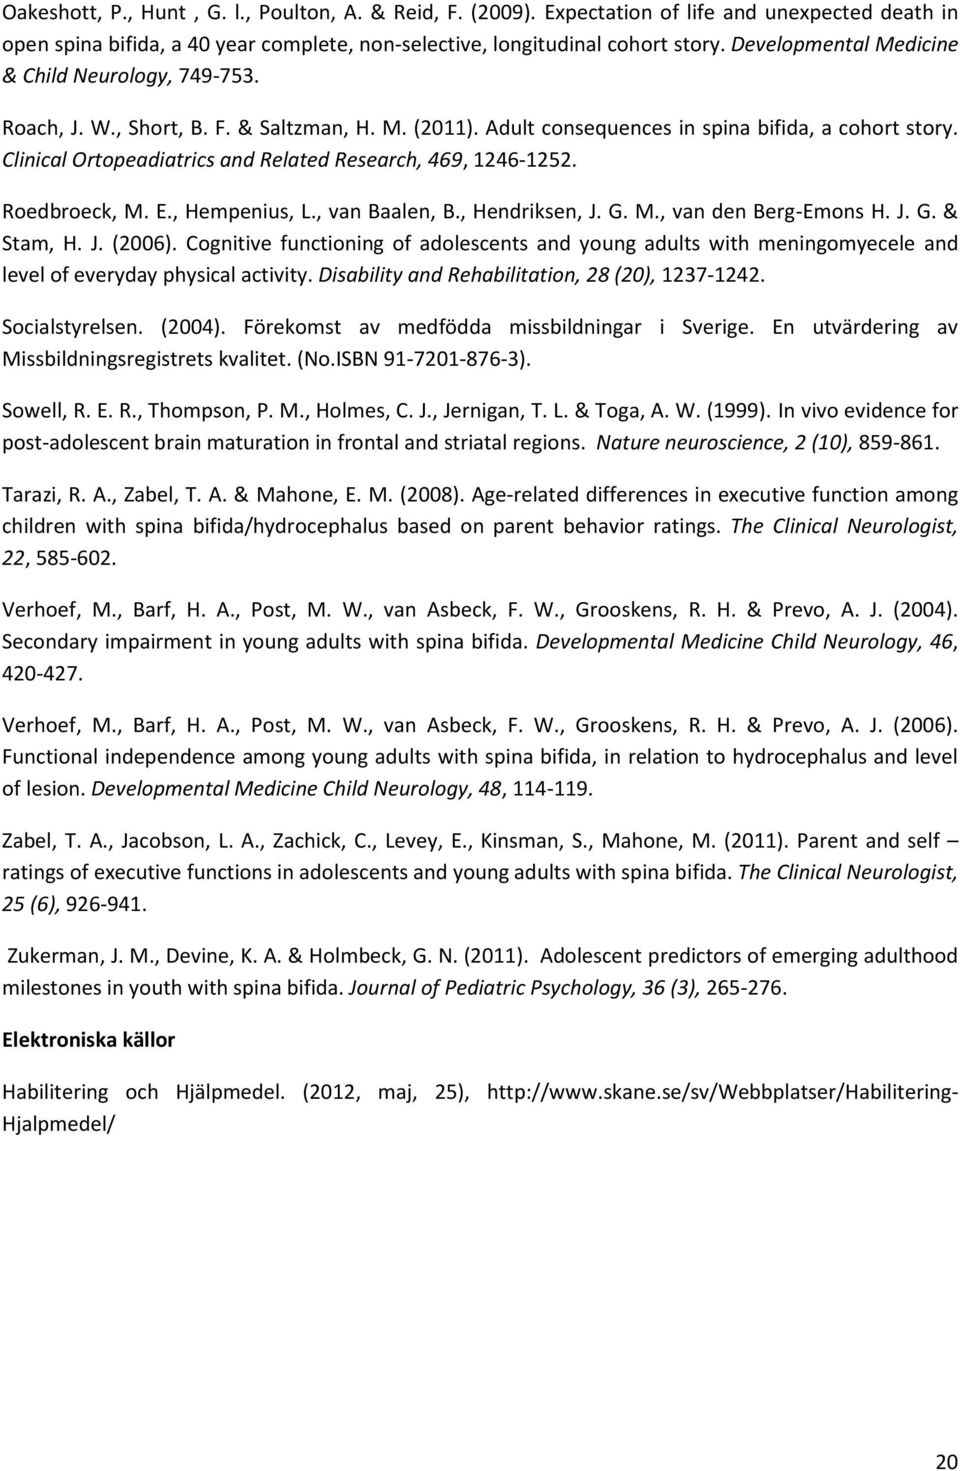 Clinical Ortopeadiatrics and Related Research, 469, 1246-1252. Roedbroeck, M. E., Hempenius, L., van Baalen, B., Hendriksen, J. G. M., van den Berg-Emons H. J. G. & Stam, H. J. (2006).